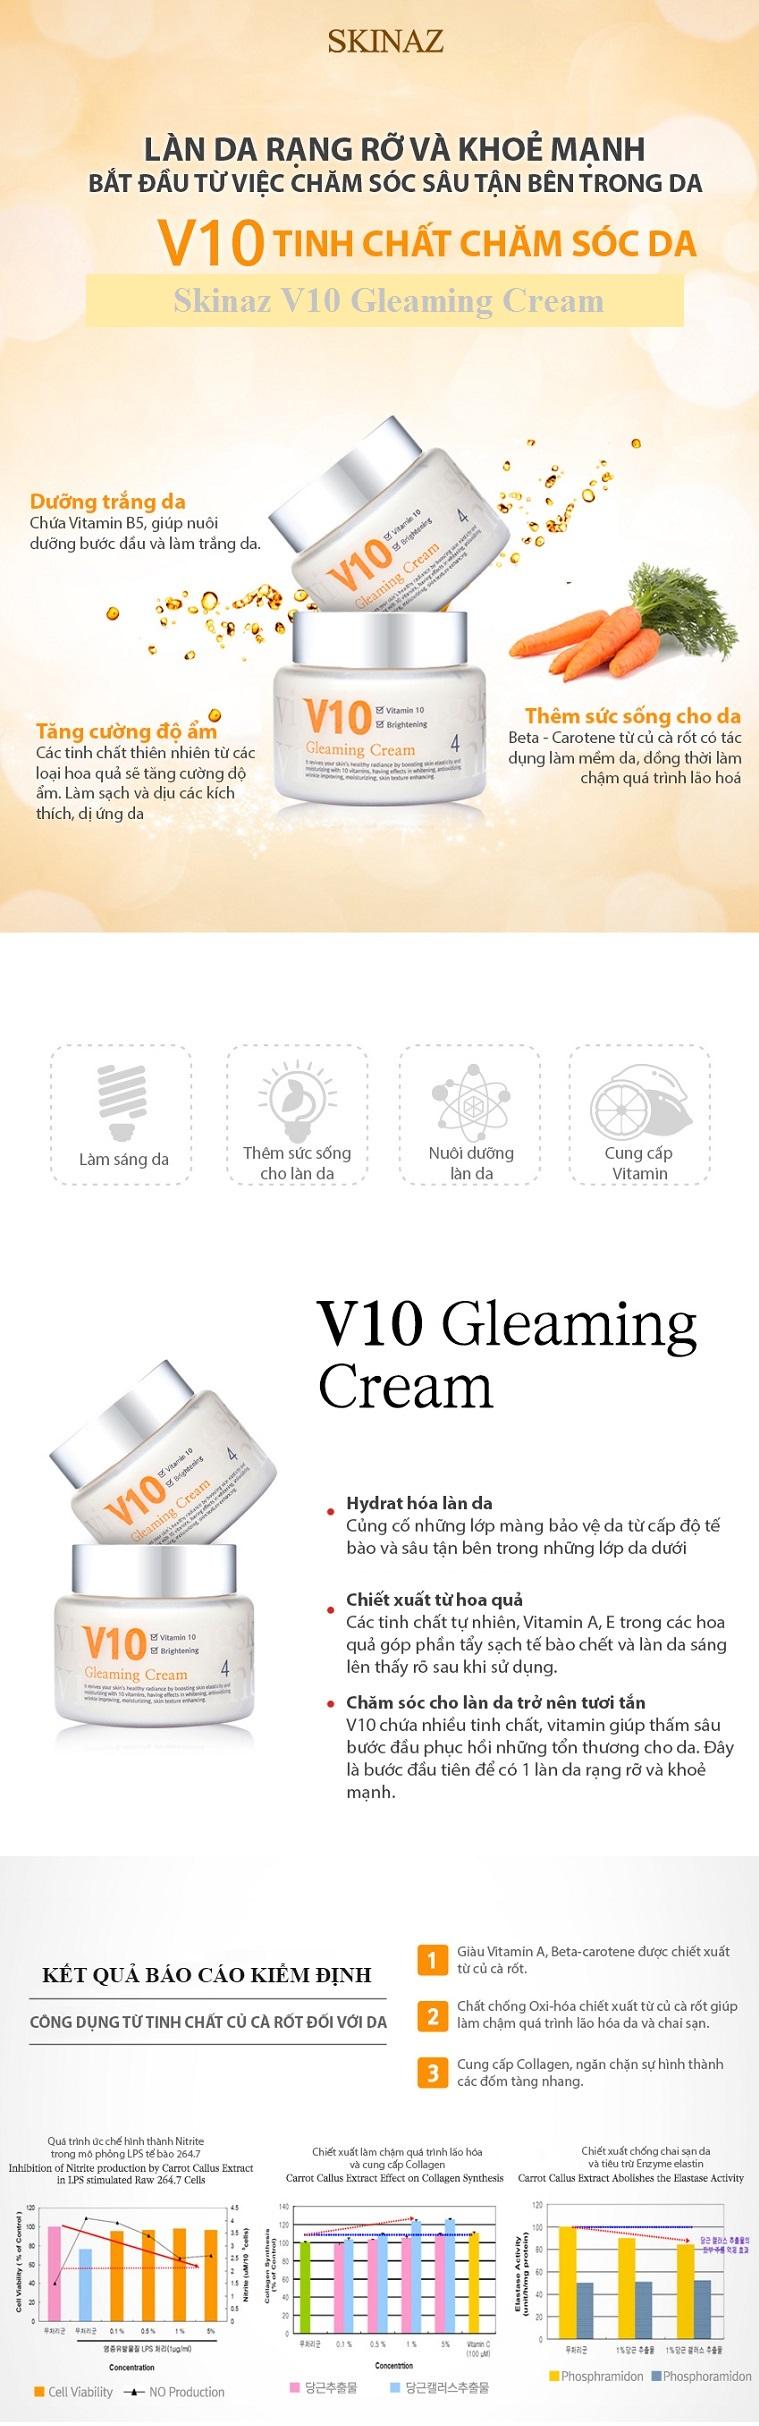 v10-cream-01-copy...jpg